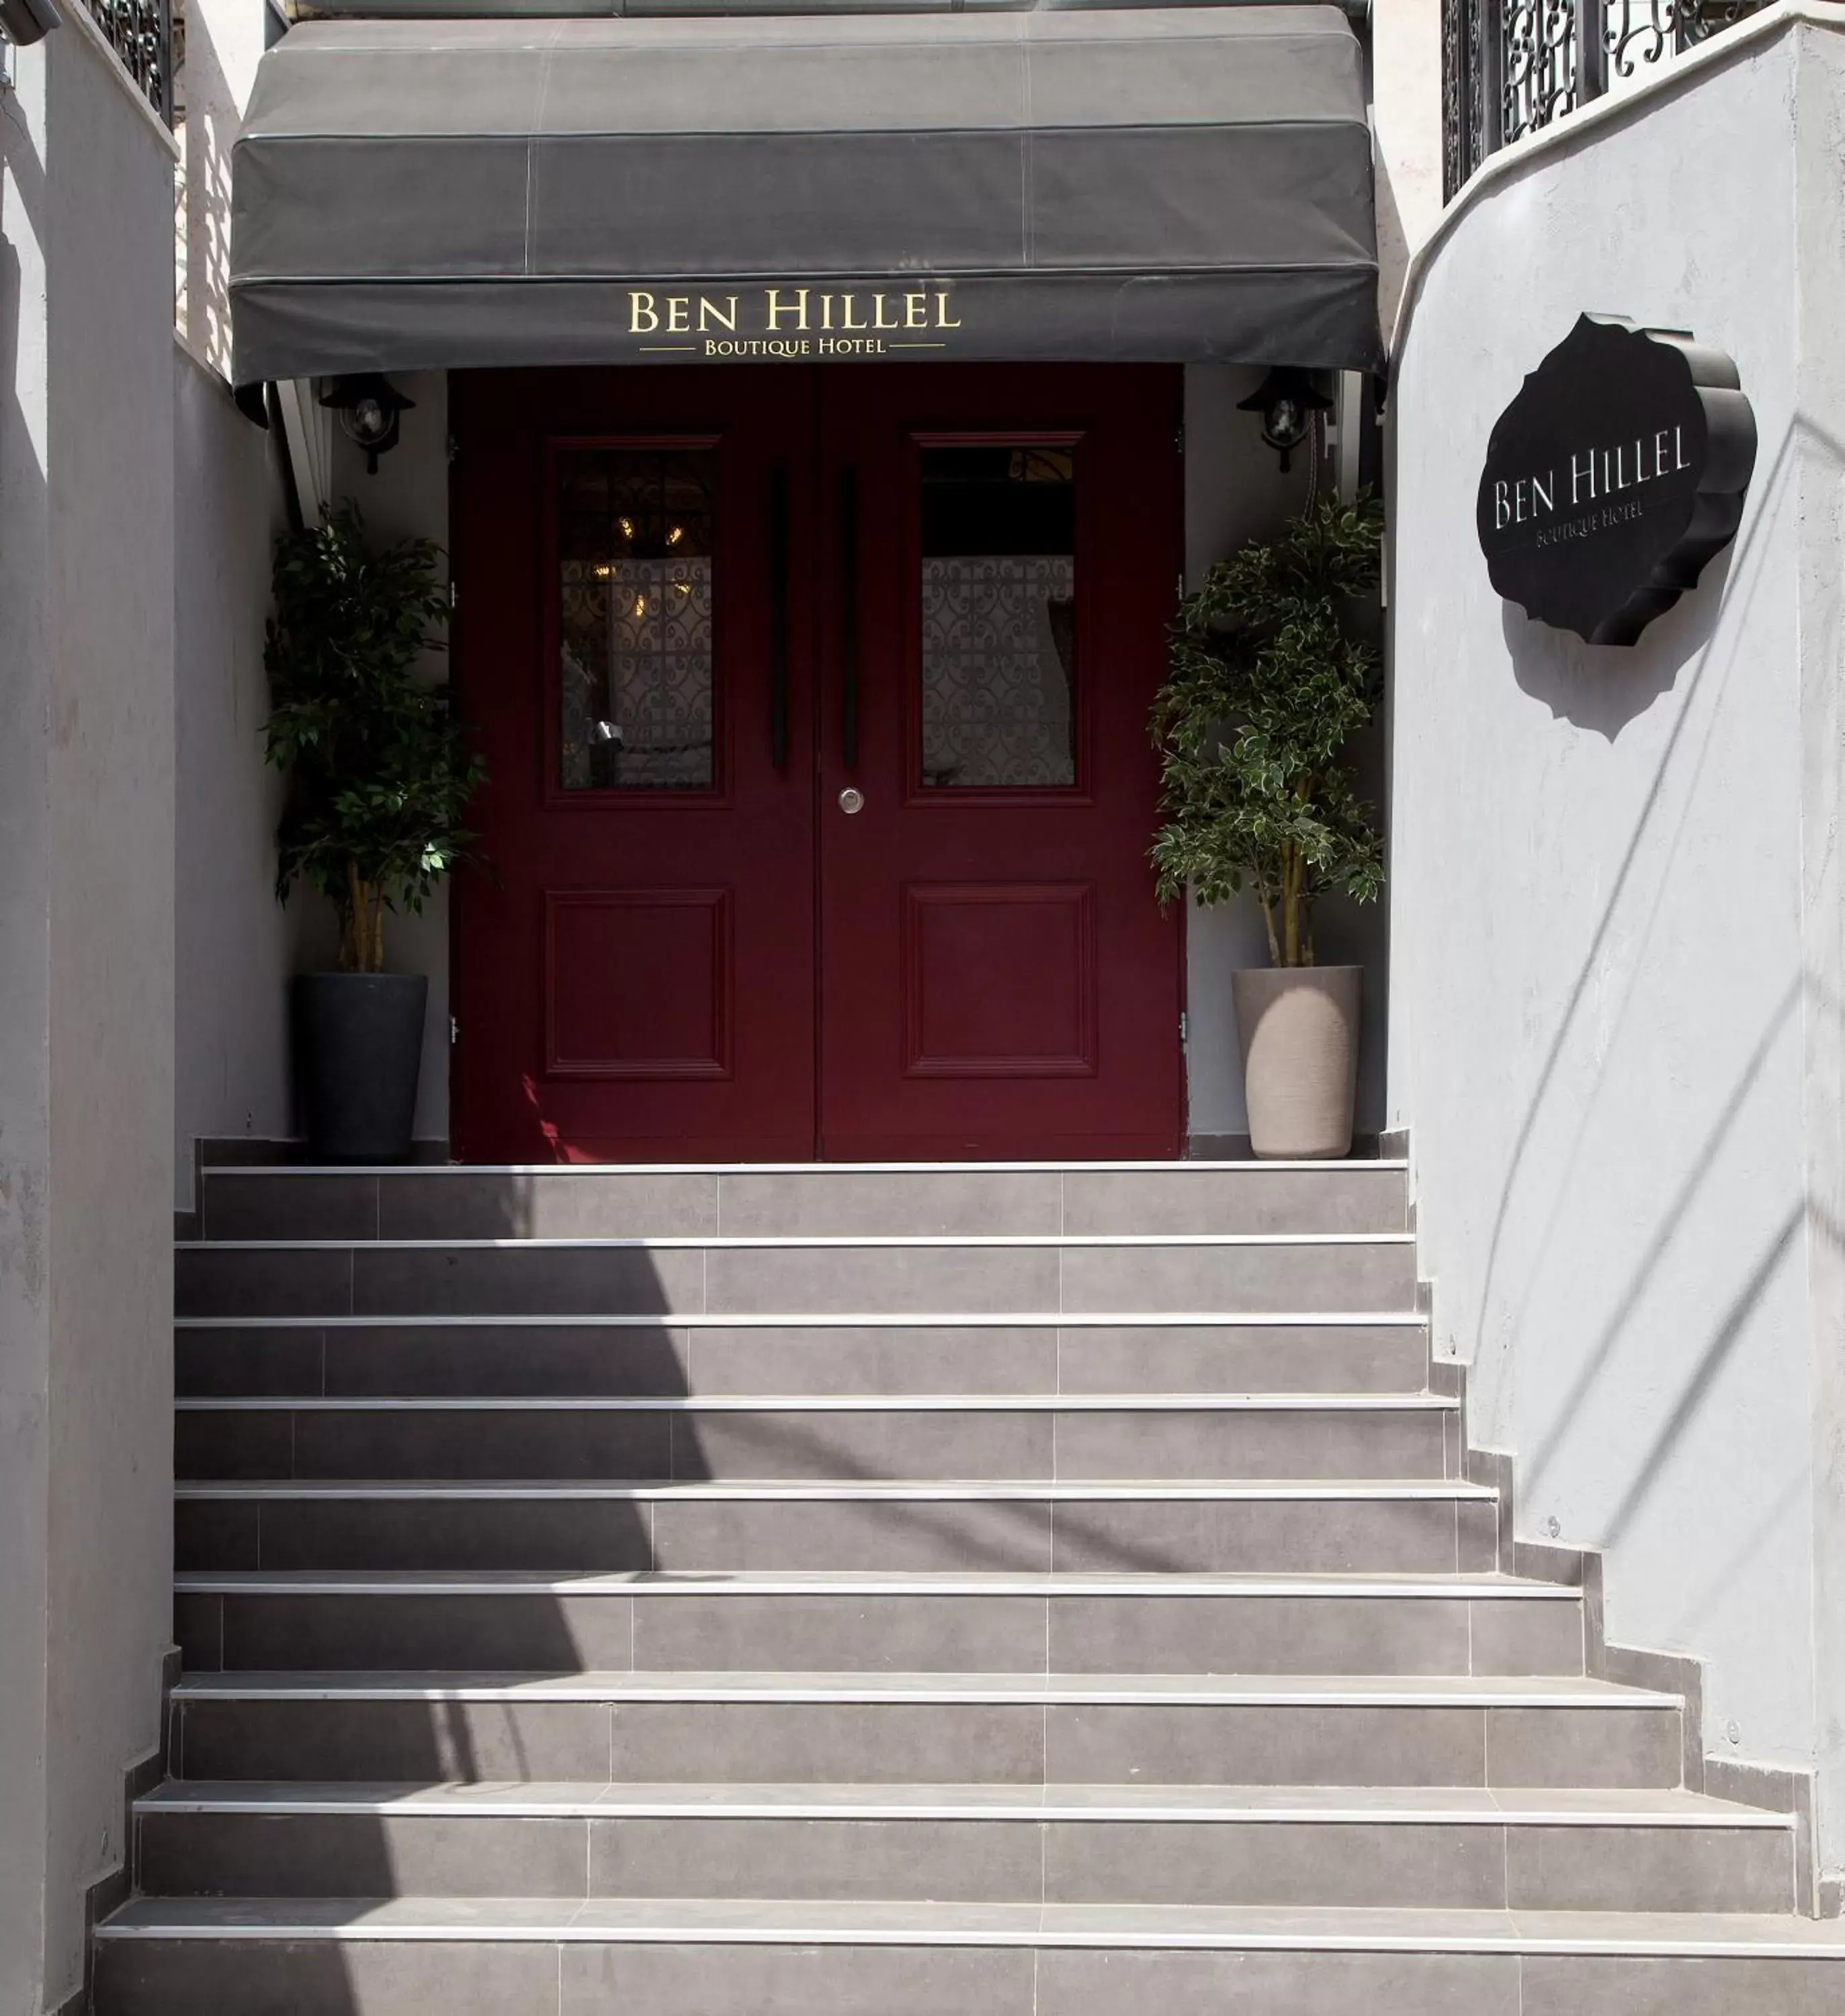 Area and facilities, Facade/Entrance in Ben Hillel Boutique Hotel